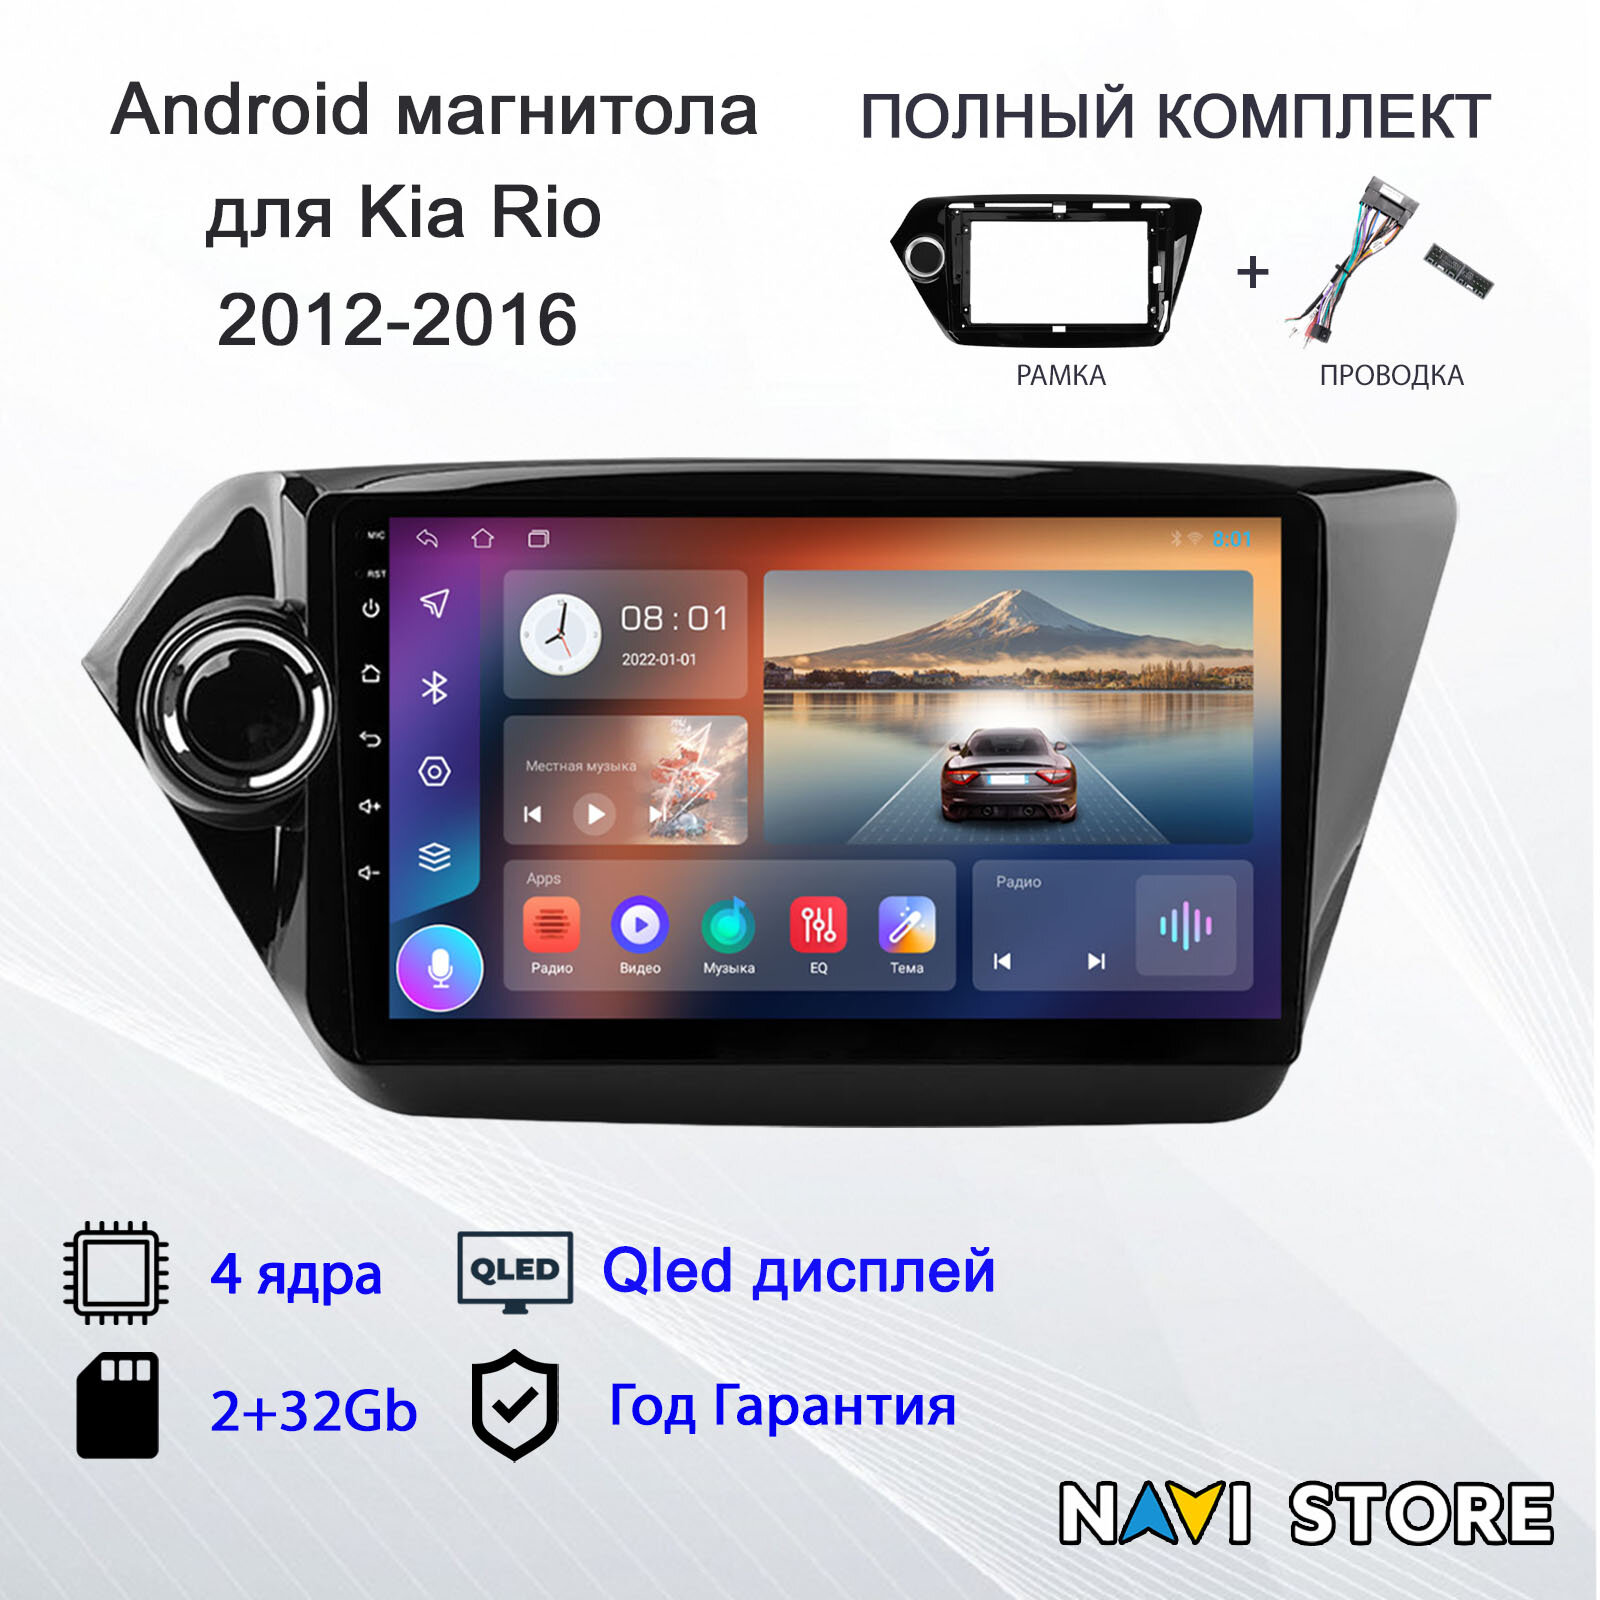 Магнитола Андроид для Kia Rio 2012-2016 2+32Gb (Android/Wi-FI/Bluetooh/2DIN/Штатная магнитола